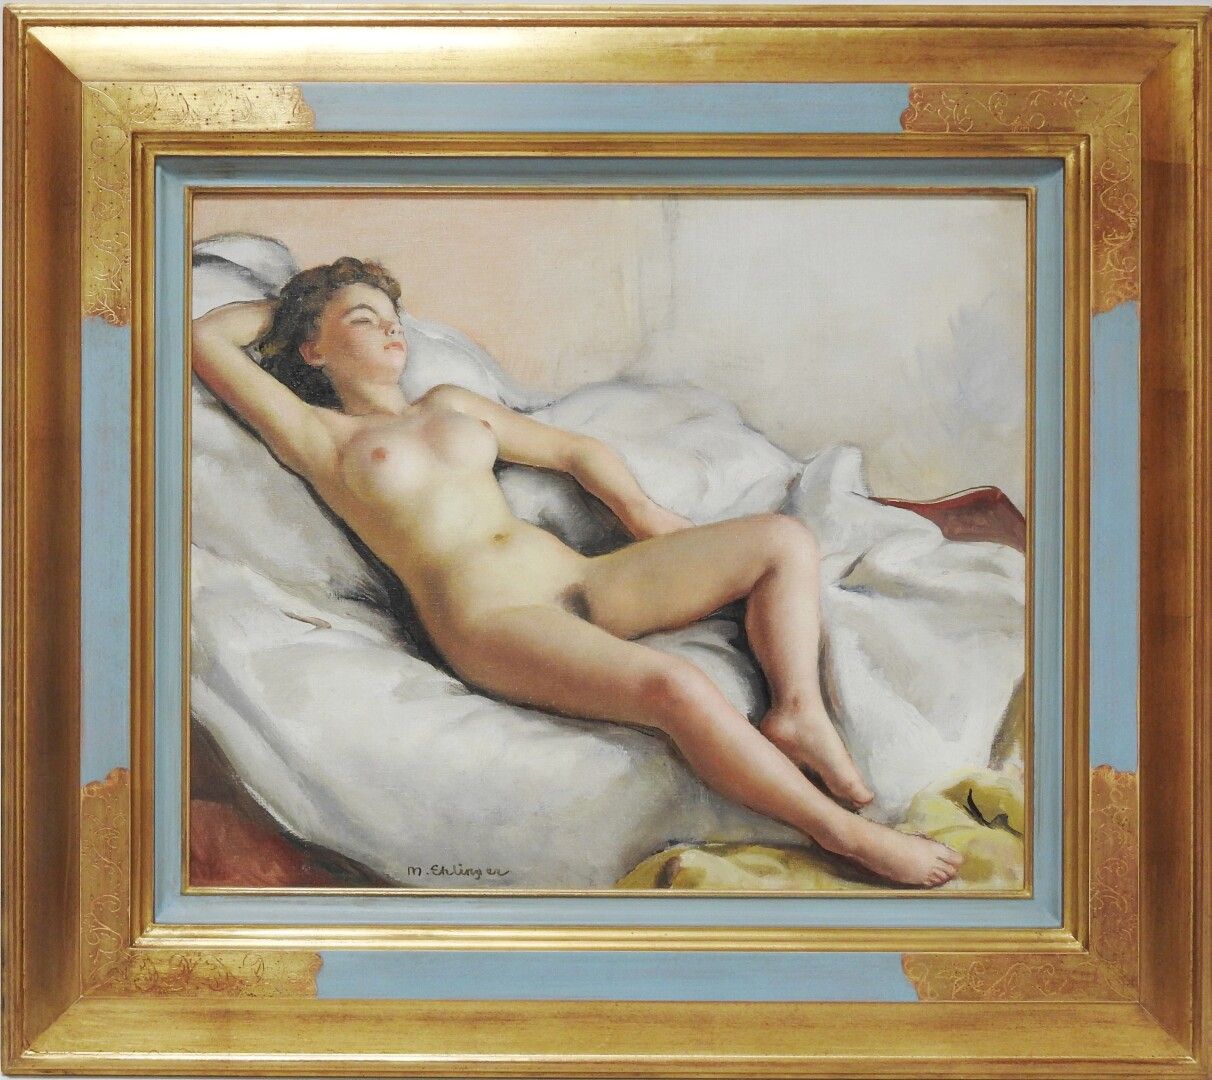 Null 莫里斯-埃林格 (1896 - 1981)

裸体与白色床单

布面油画，左下角有签名

46.5 x 55 厘米